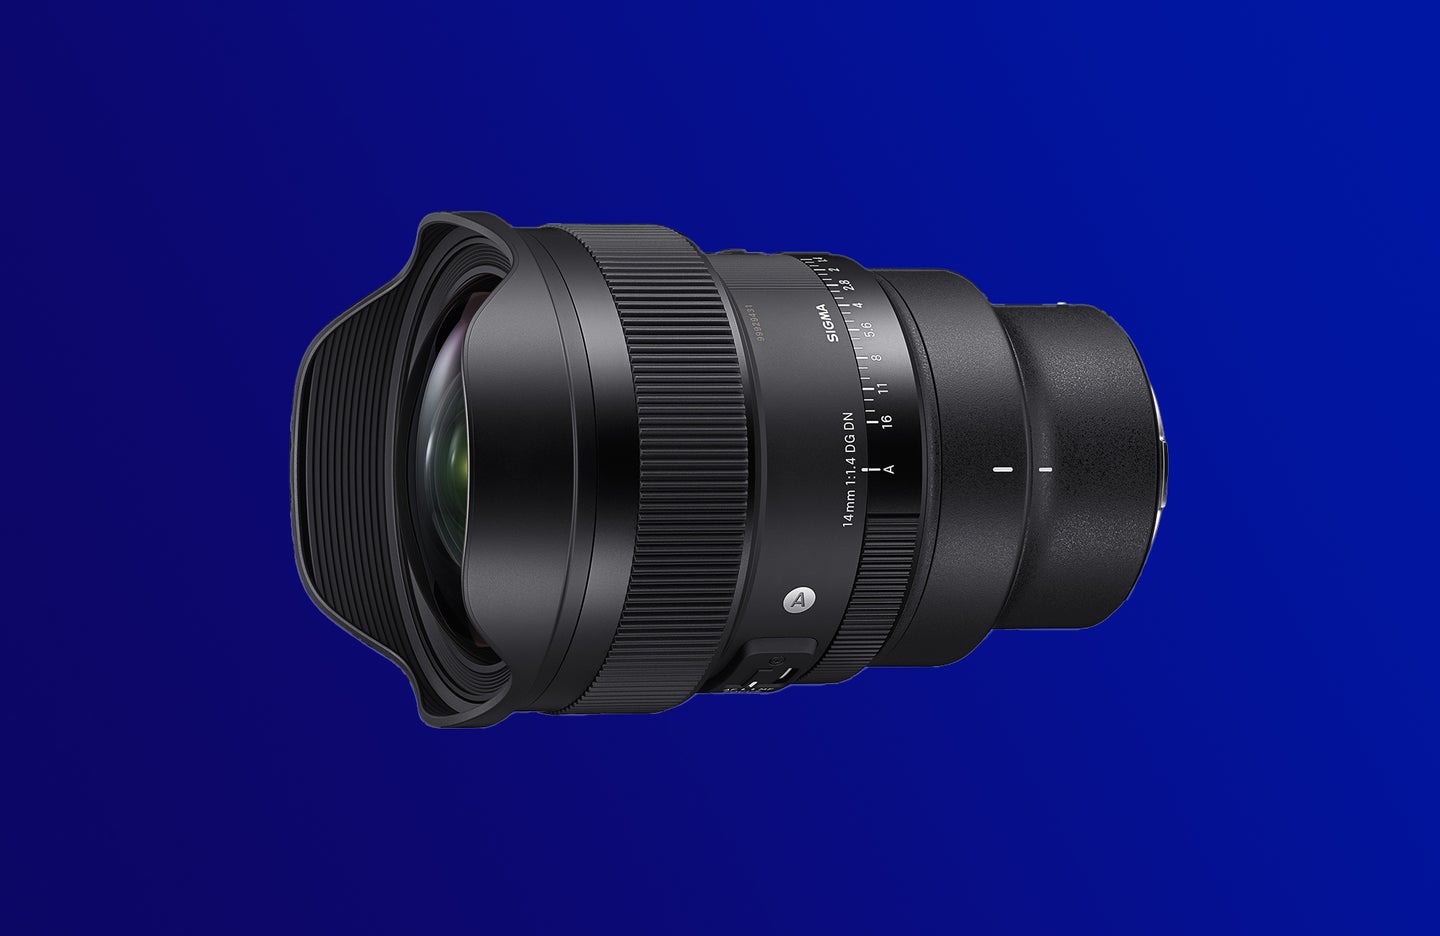 Sigma 14mm f/1.4 DG DN Art lens against a dark blue background